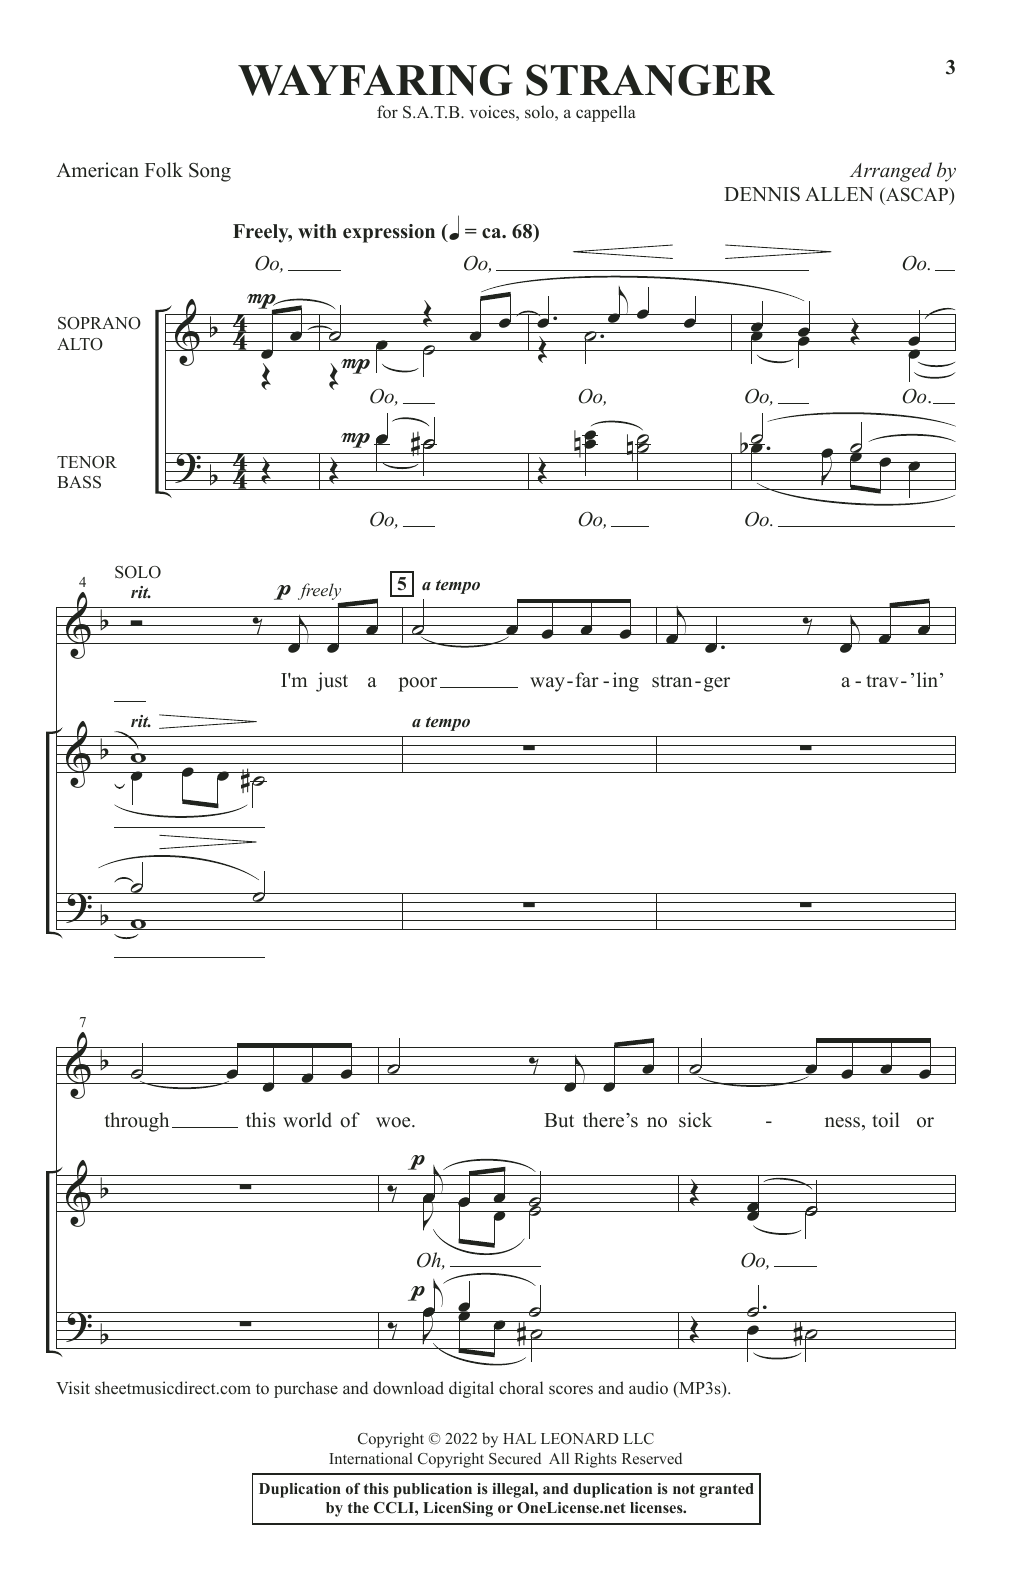 American Folk Song Wayfaring Stranger (arr. Dennis Allen) Sheet Music Notes & Chords for SATB Choir - Download or Print PDF